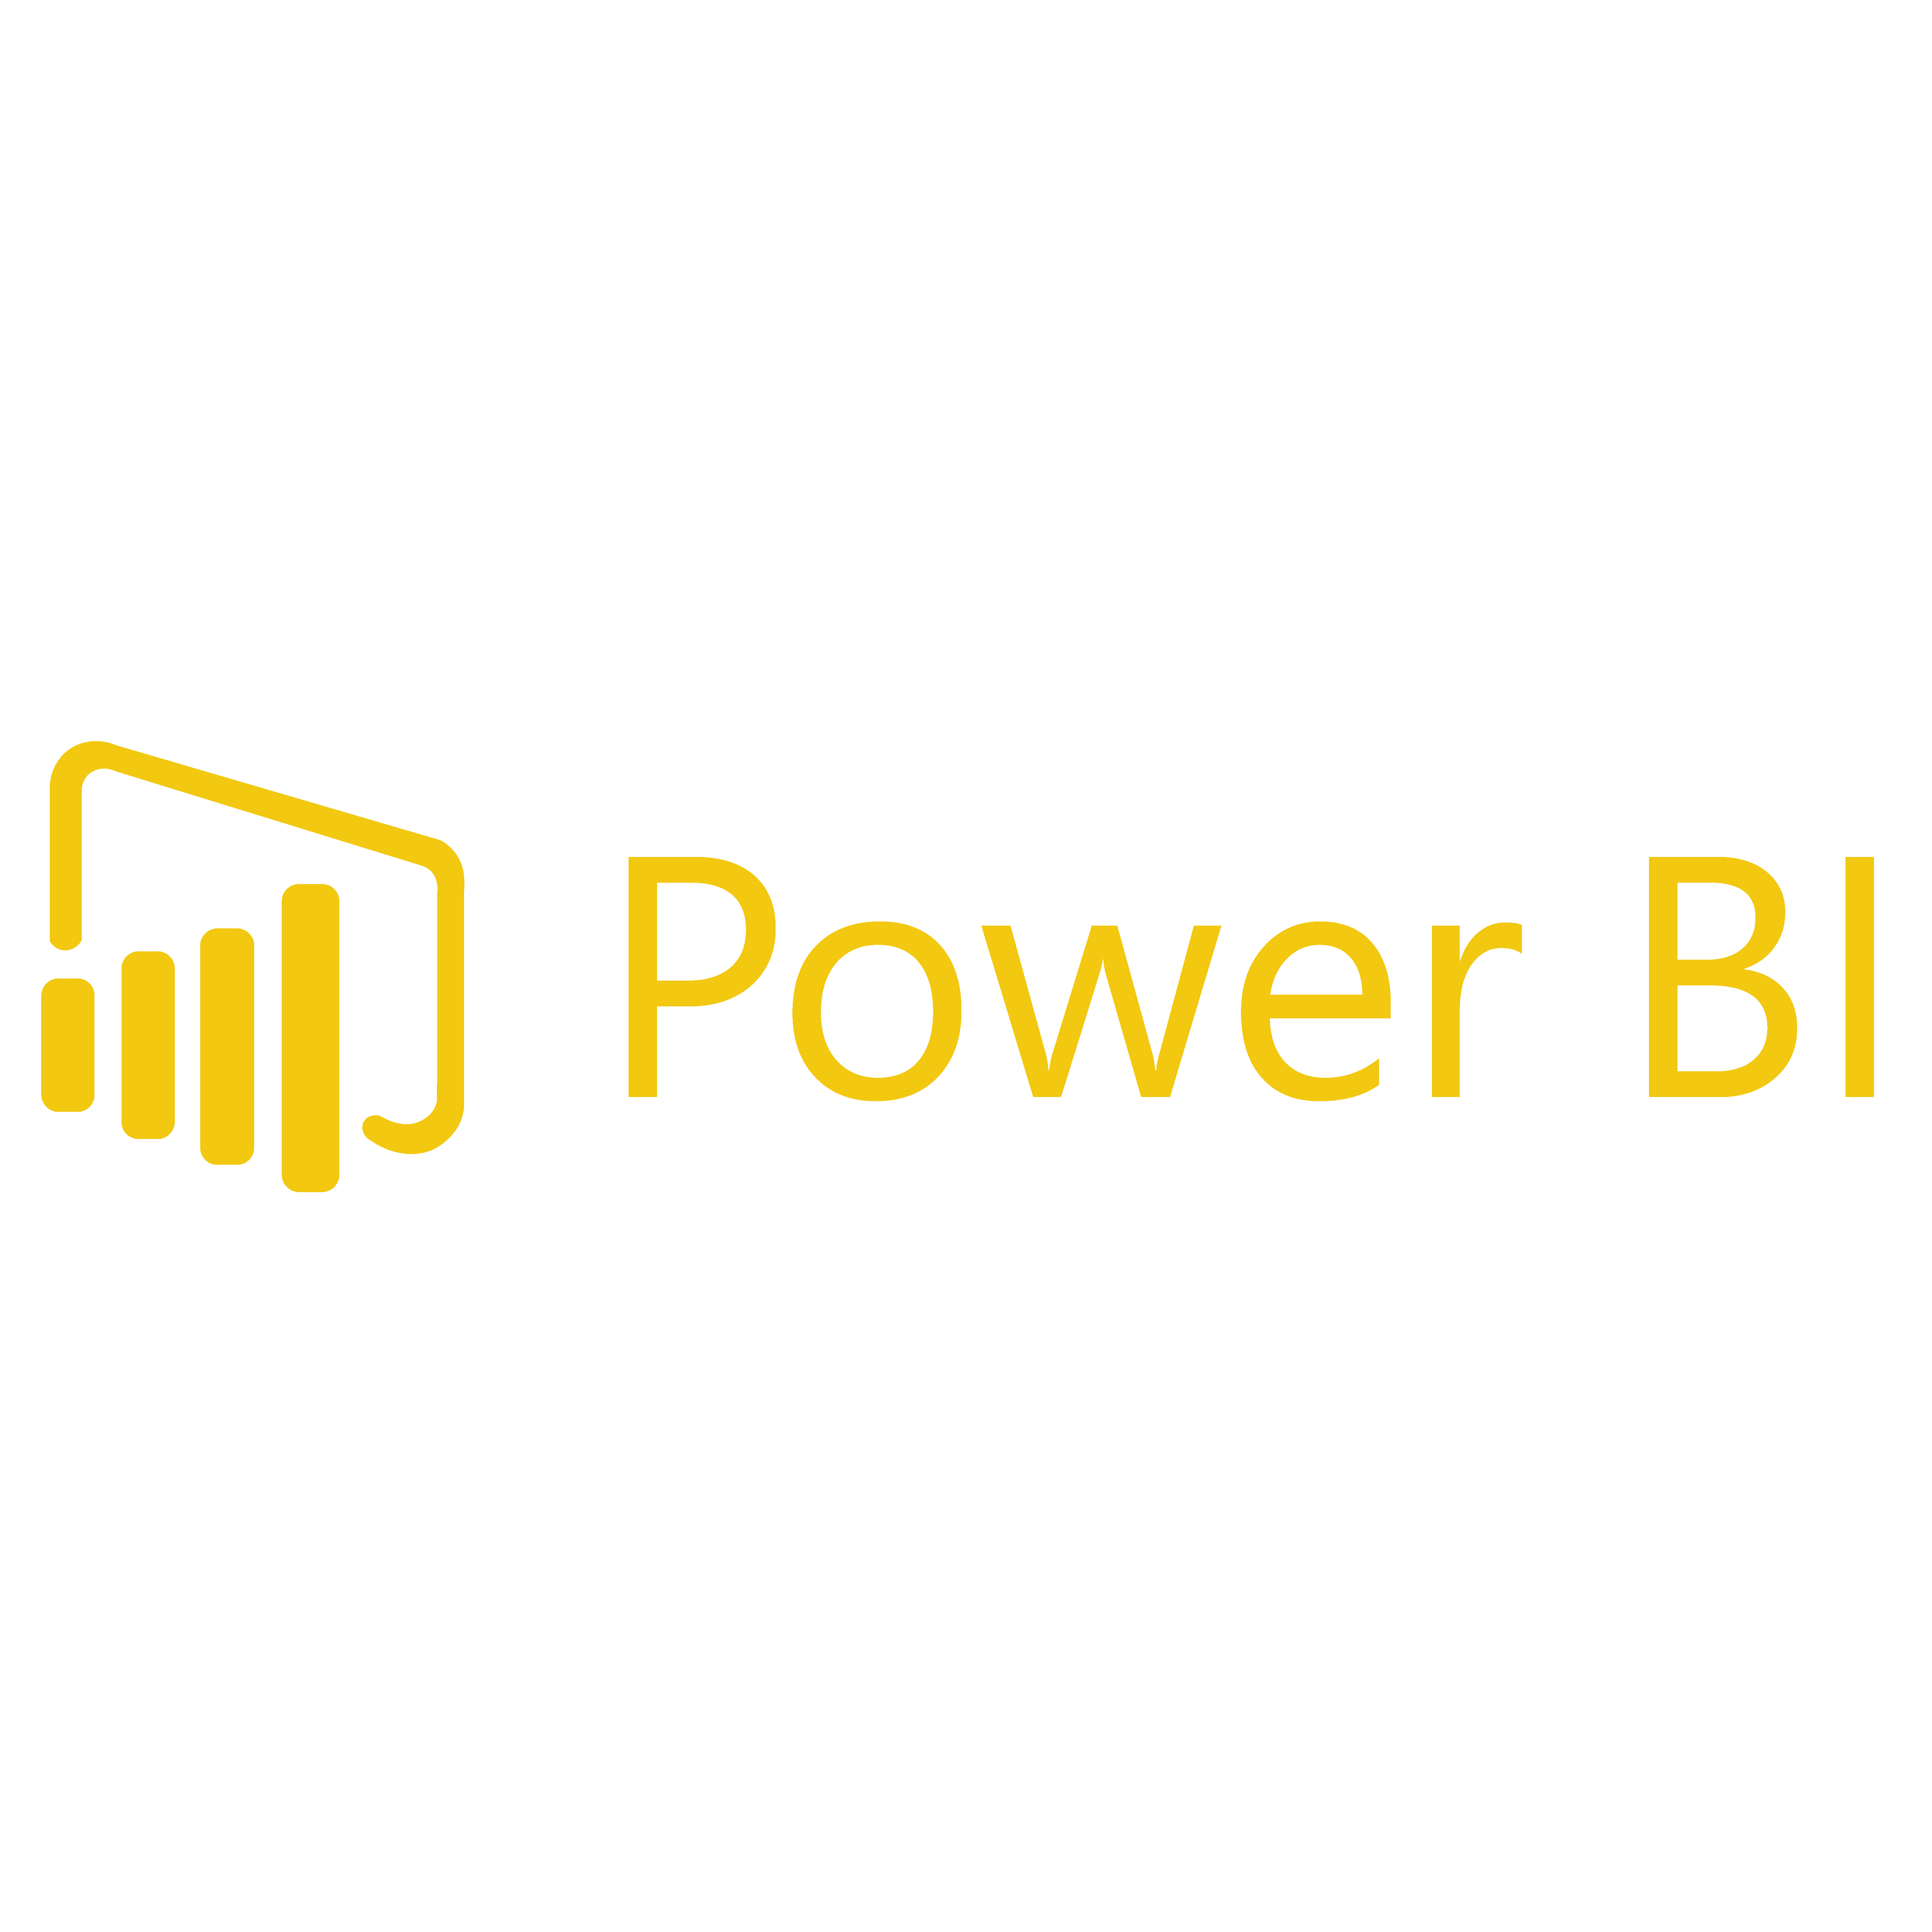 Power bi download. Значок Power bi. MS Power bi логотип. Power bi логотип без фона.  Microsoft Power bi лого jpg.